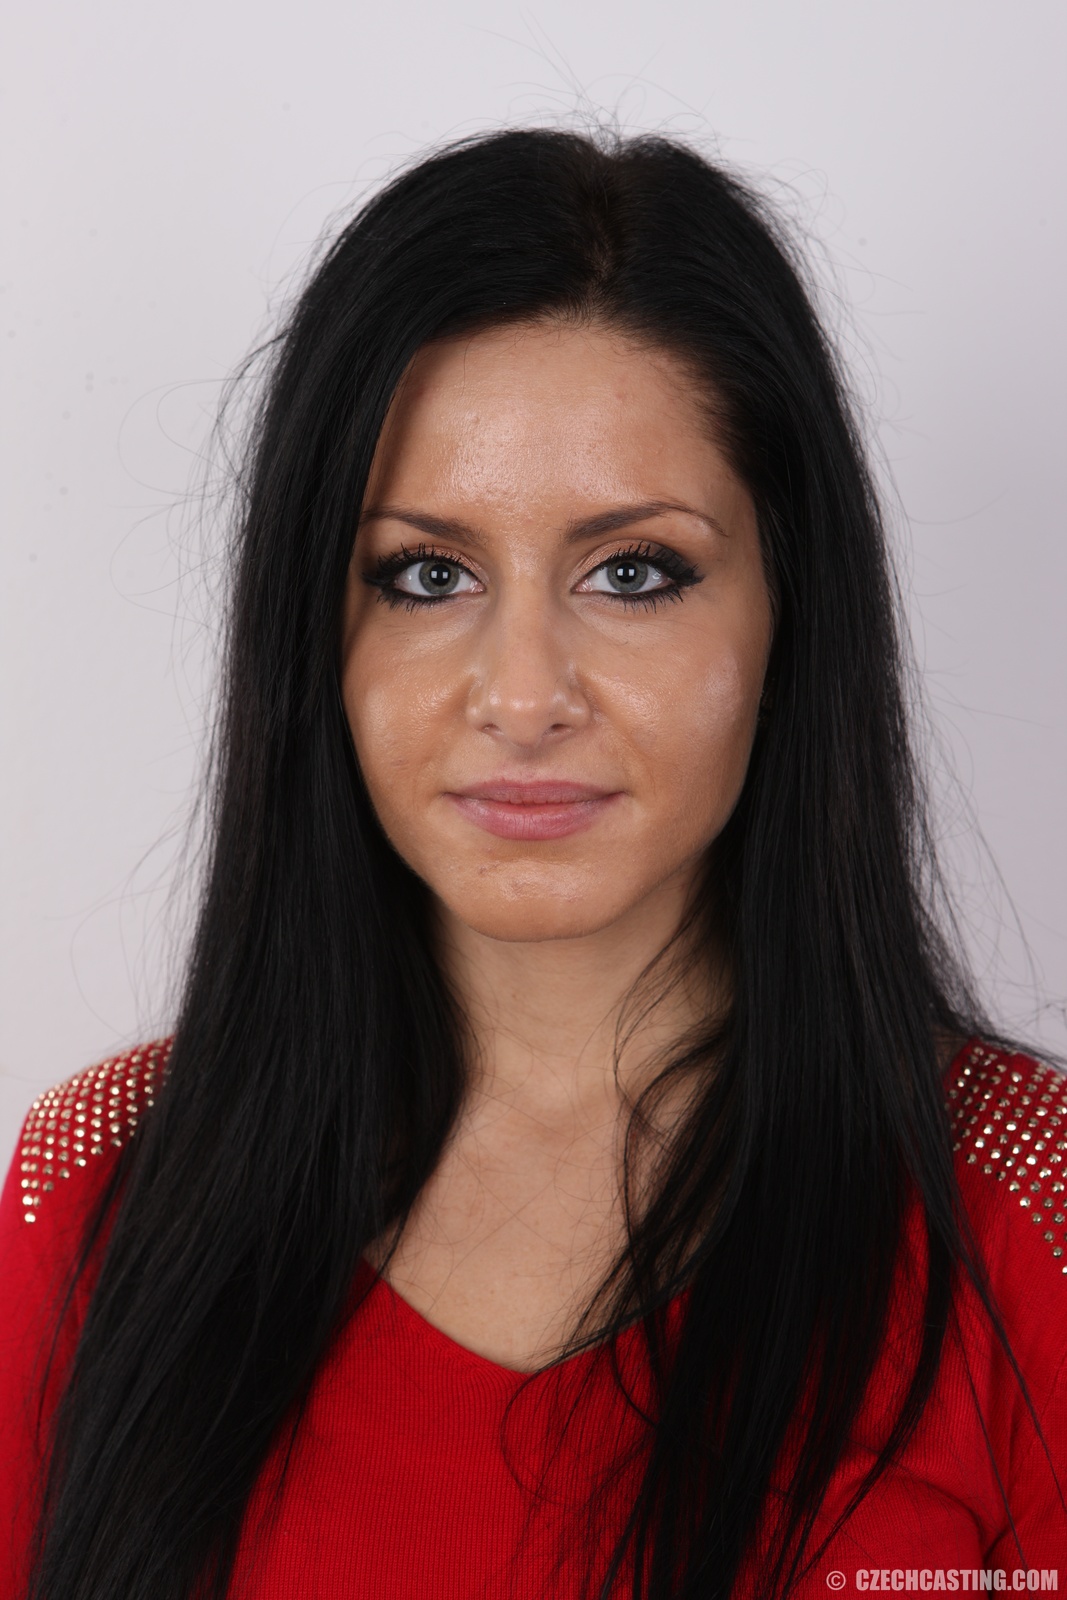 Milena czech casting Czechcasting Model